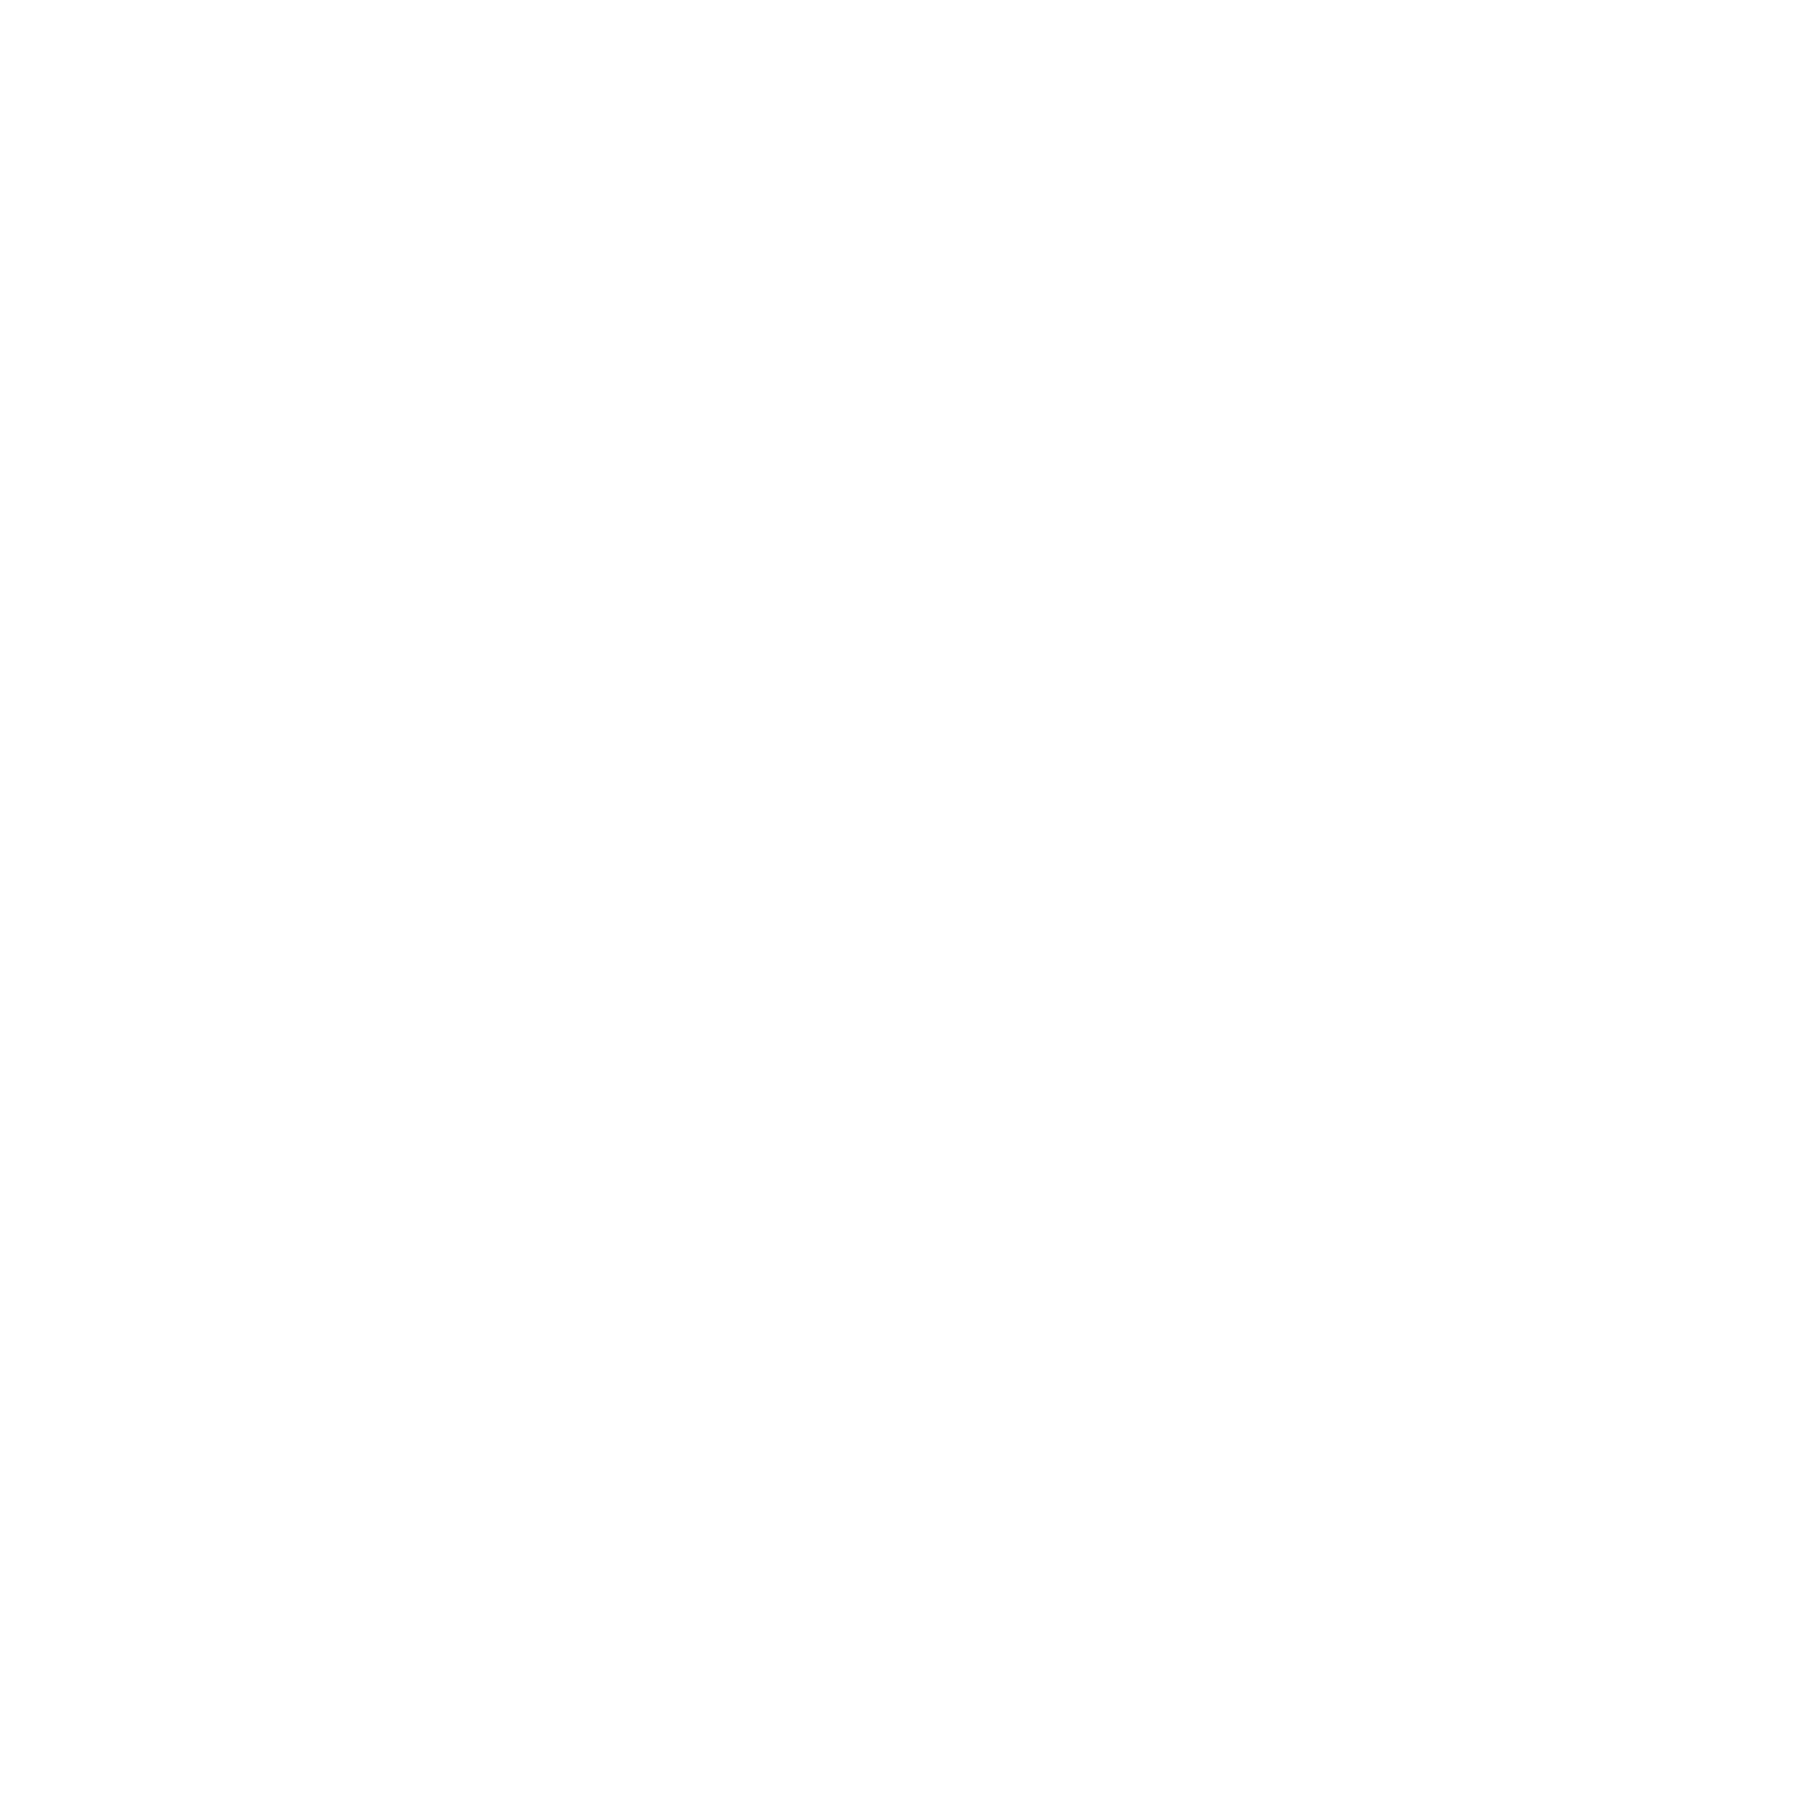 Craig's Hair & Beauty Studio